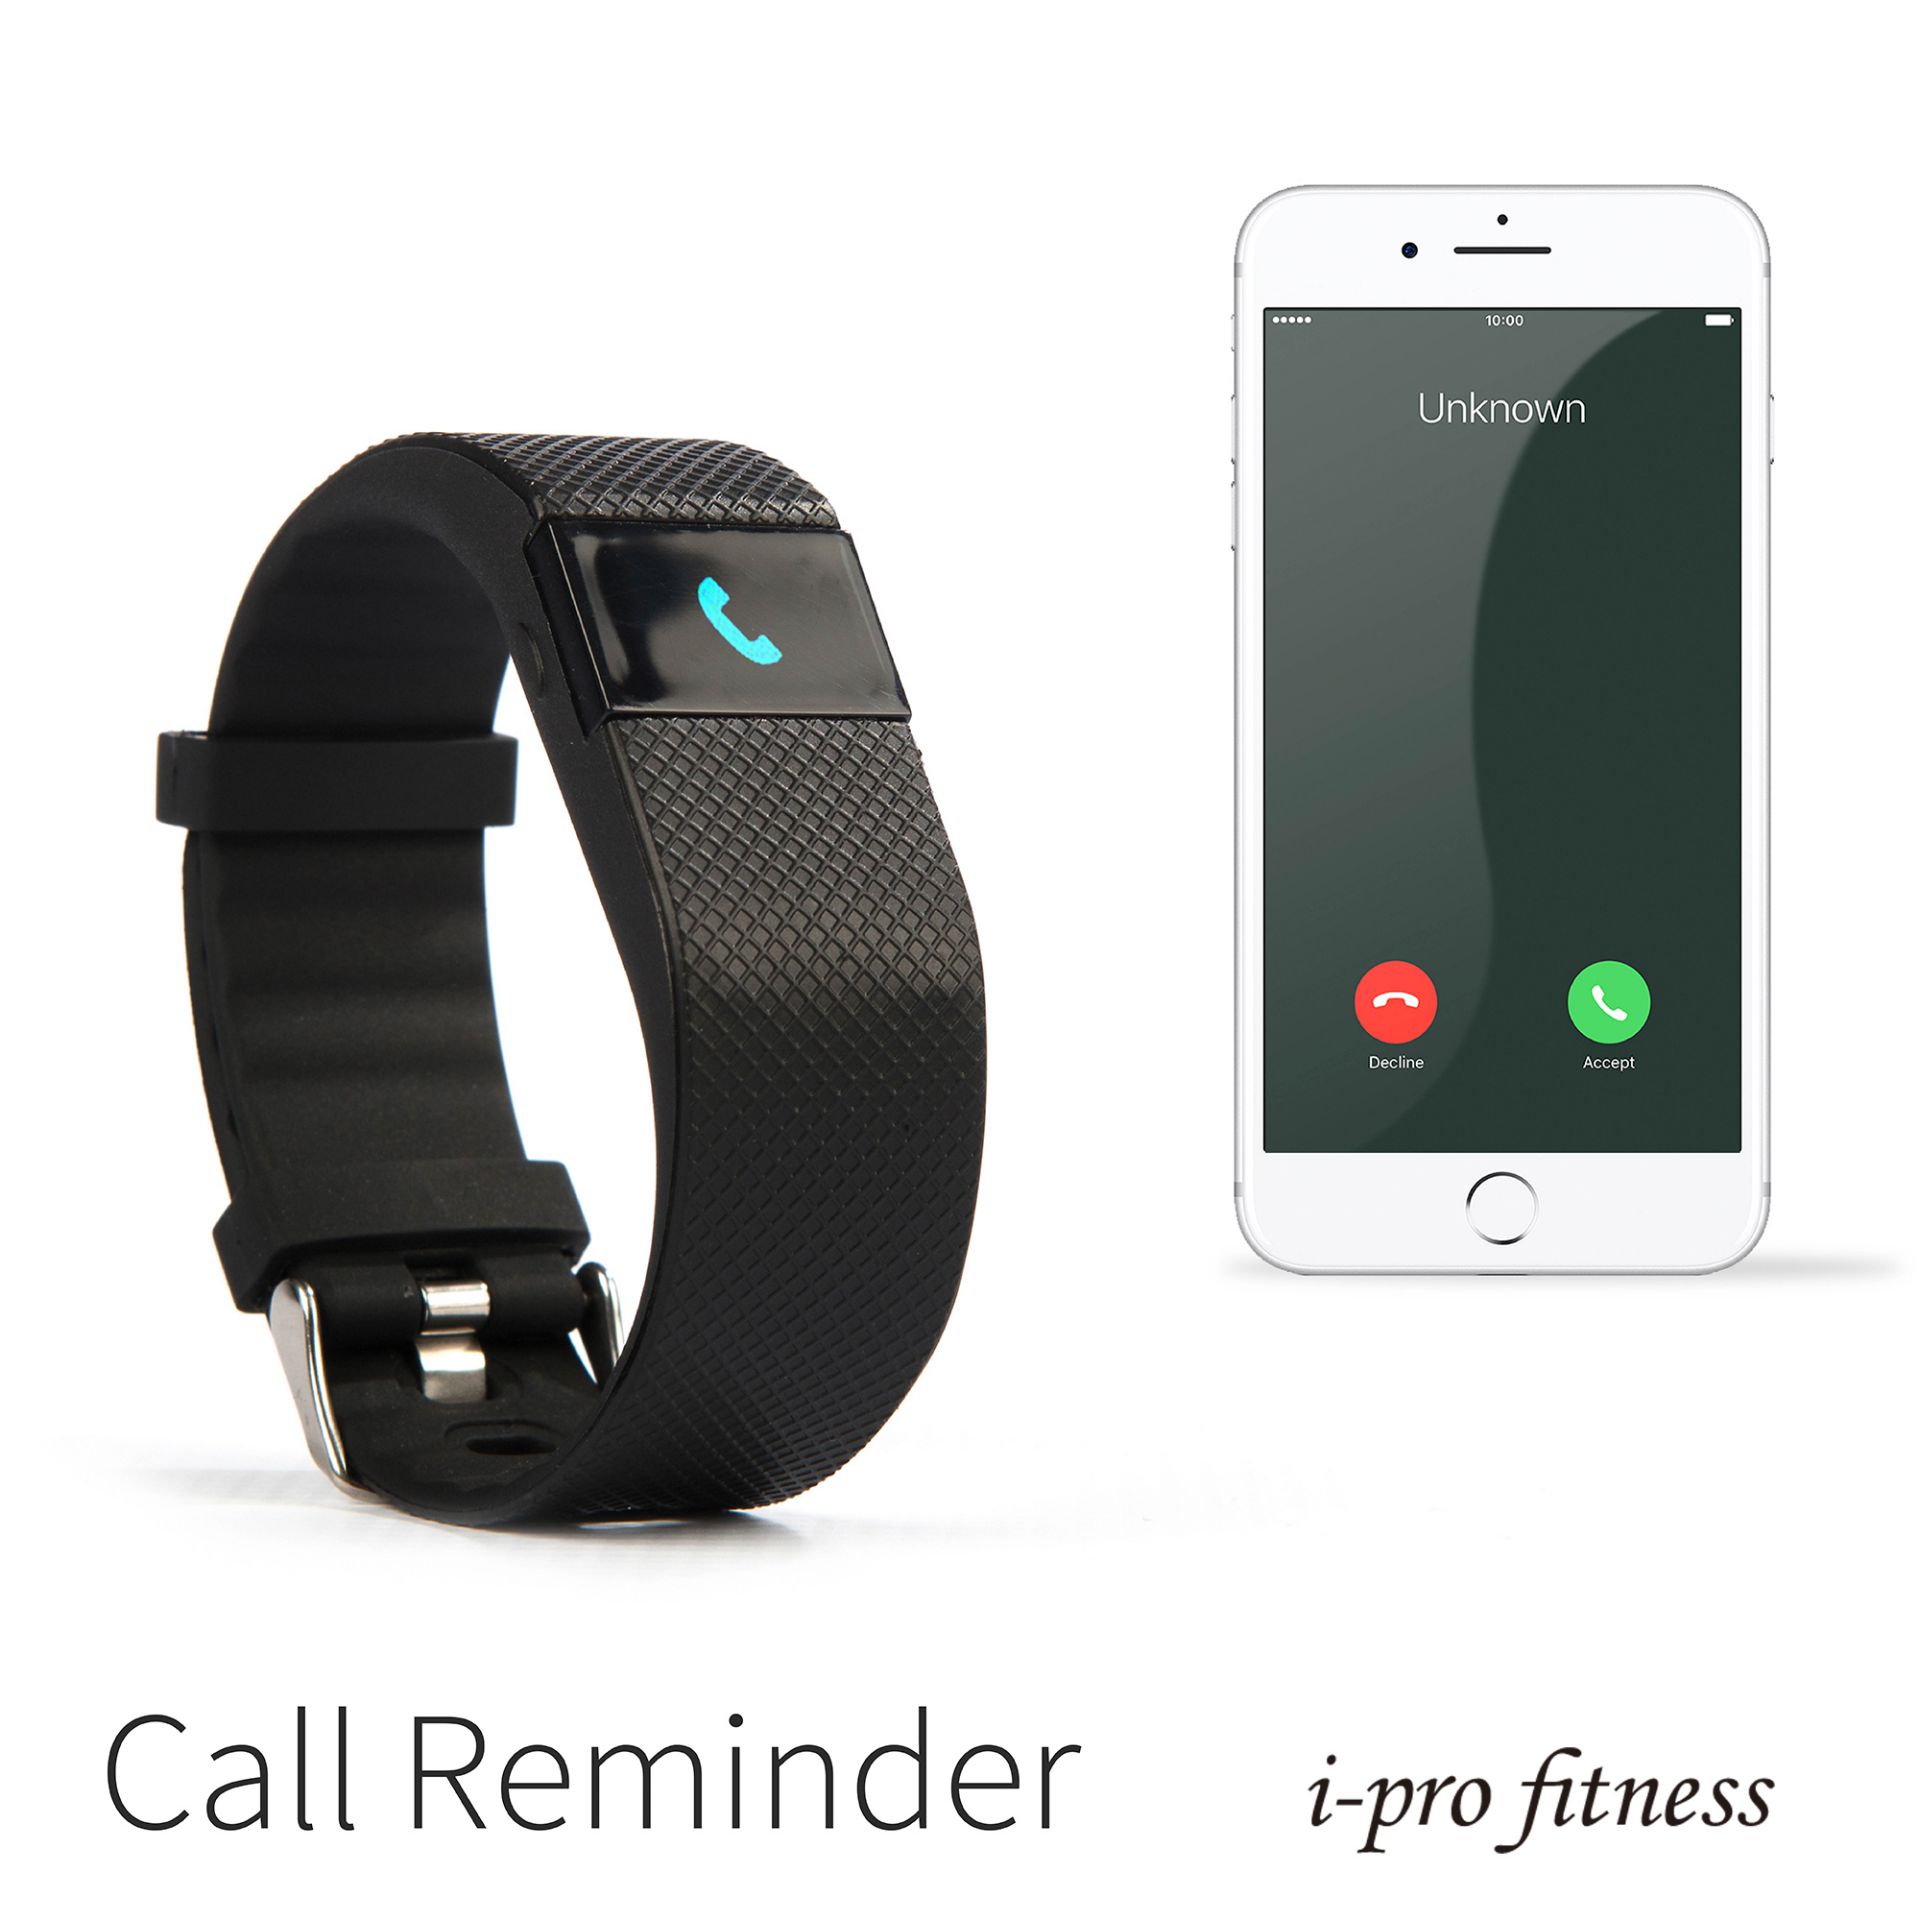 20x Fitness Tracker i-pro fitness, Bluetooth 4.0 Sports Smart Bracelet, Heart Rate Monitor